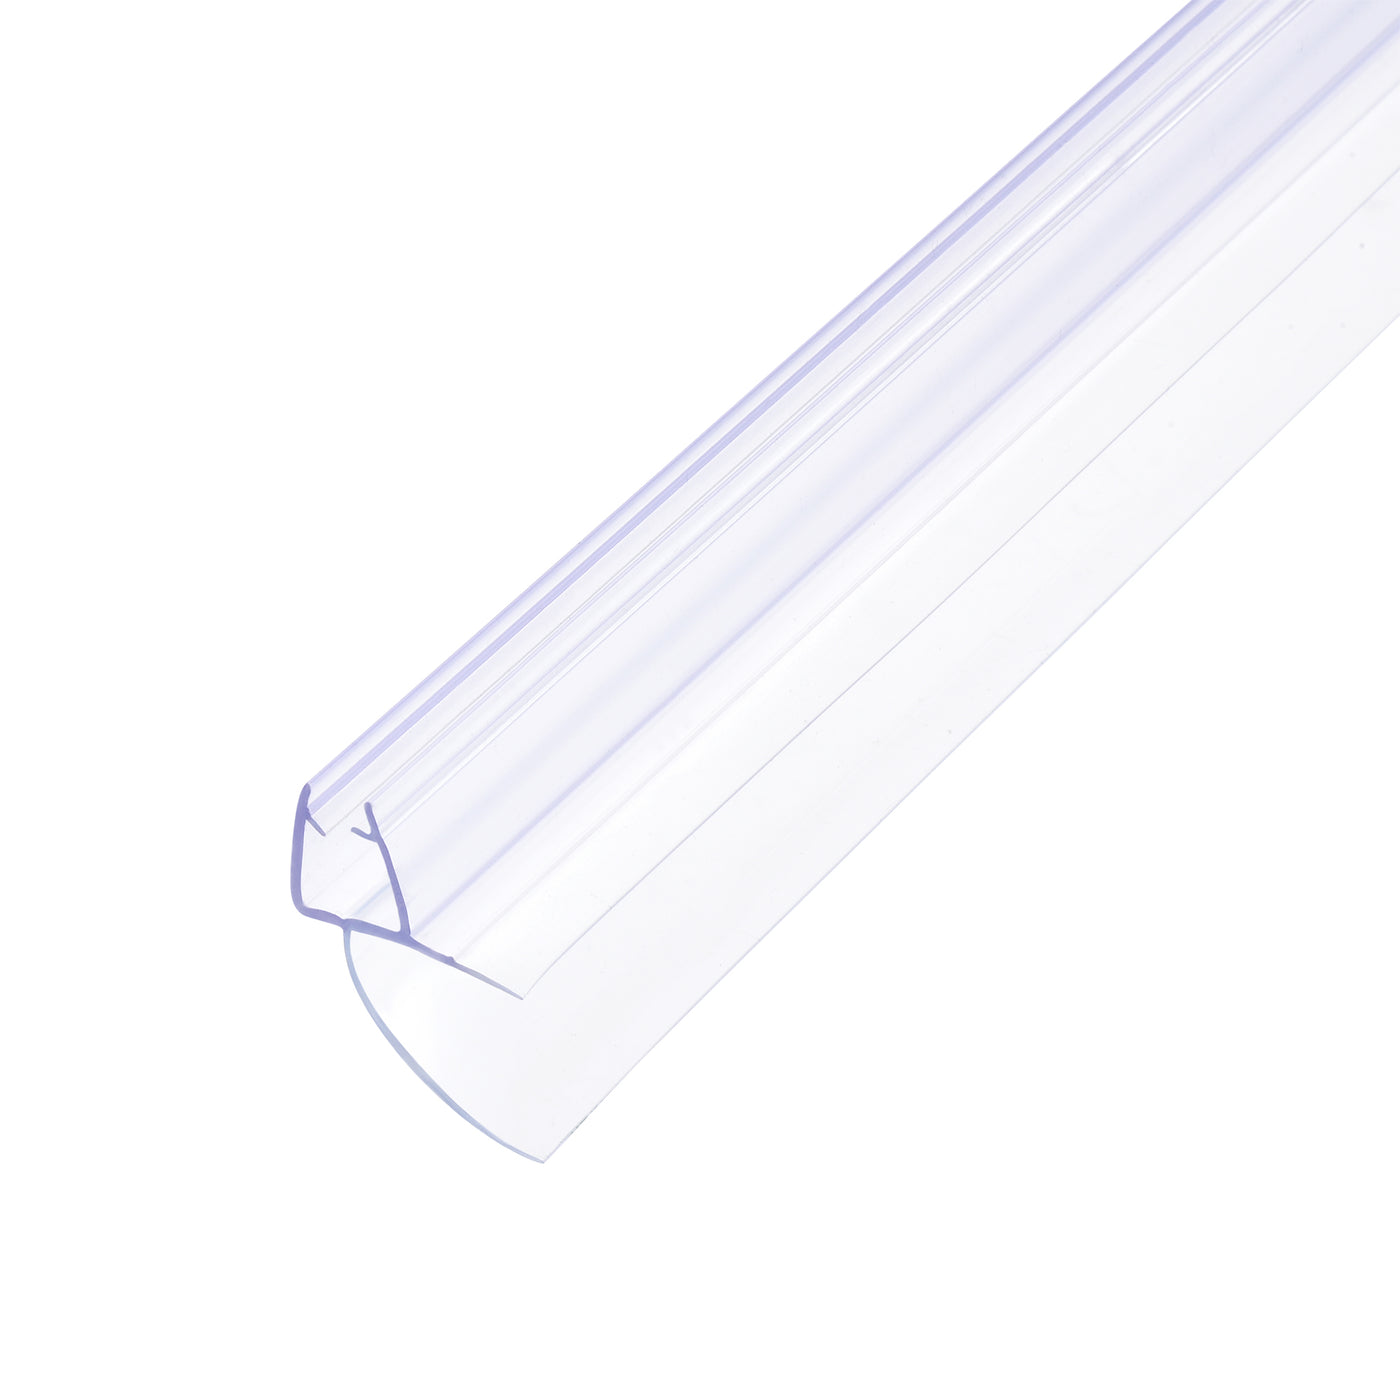 uxcell Uxcell Frameless Glass Shower Door Sweep, 27.56" Long, with 1"(25mm) Drip Rail - 5/16"(8mm) Glass, H-Type Door Bottom Side Seal Strip